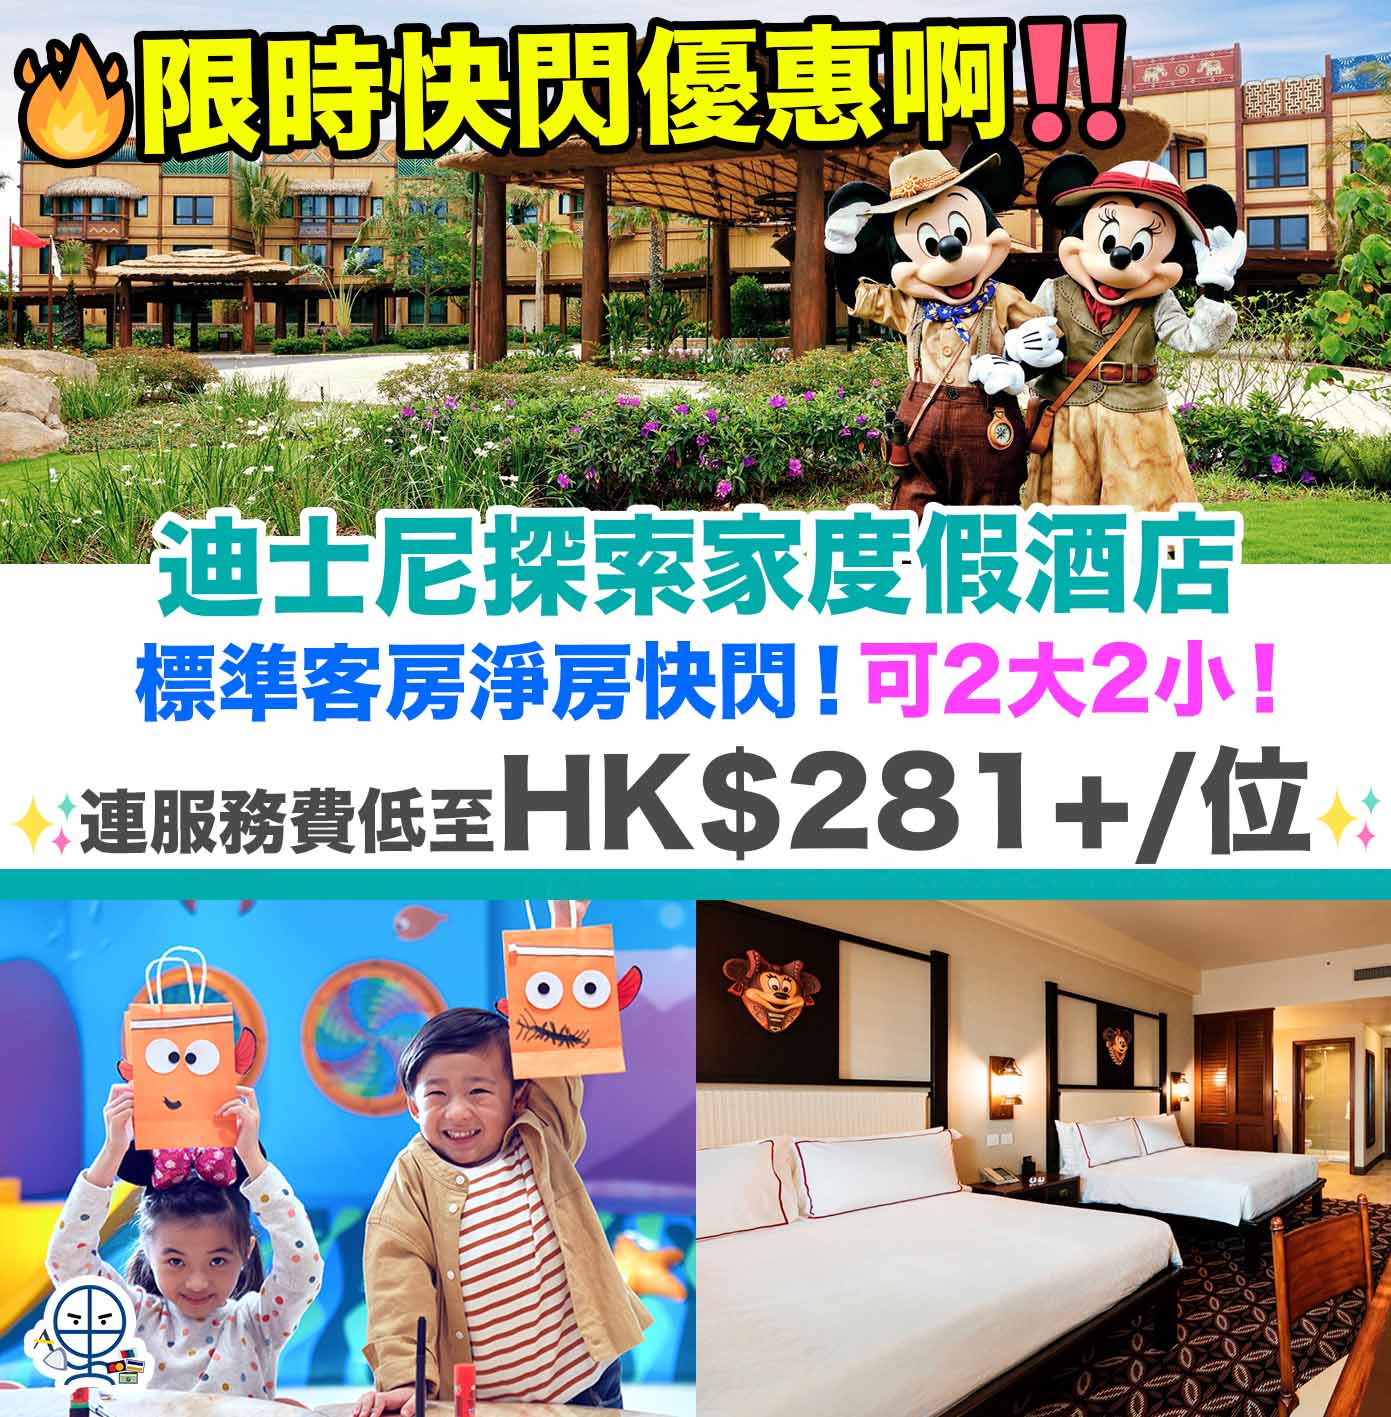 Hong Kong Disneyland-staycation-disneyland resort-香港迪士尼Staycation優惠-迪士尼樂園酒店-探索家度假酒店